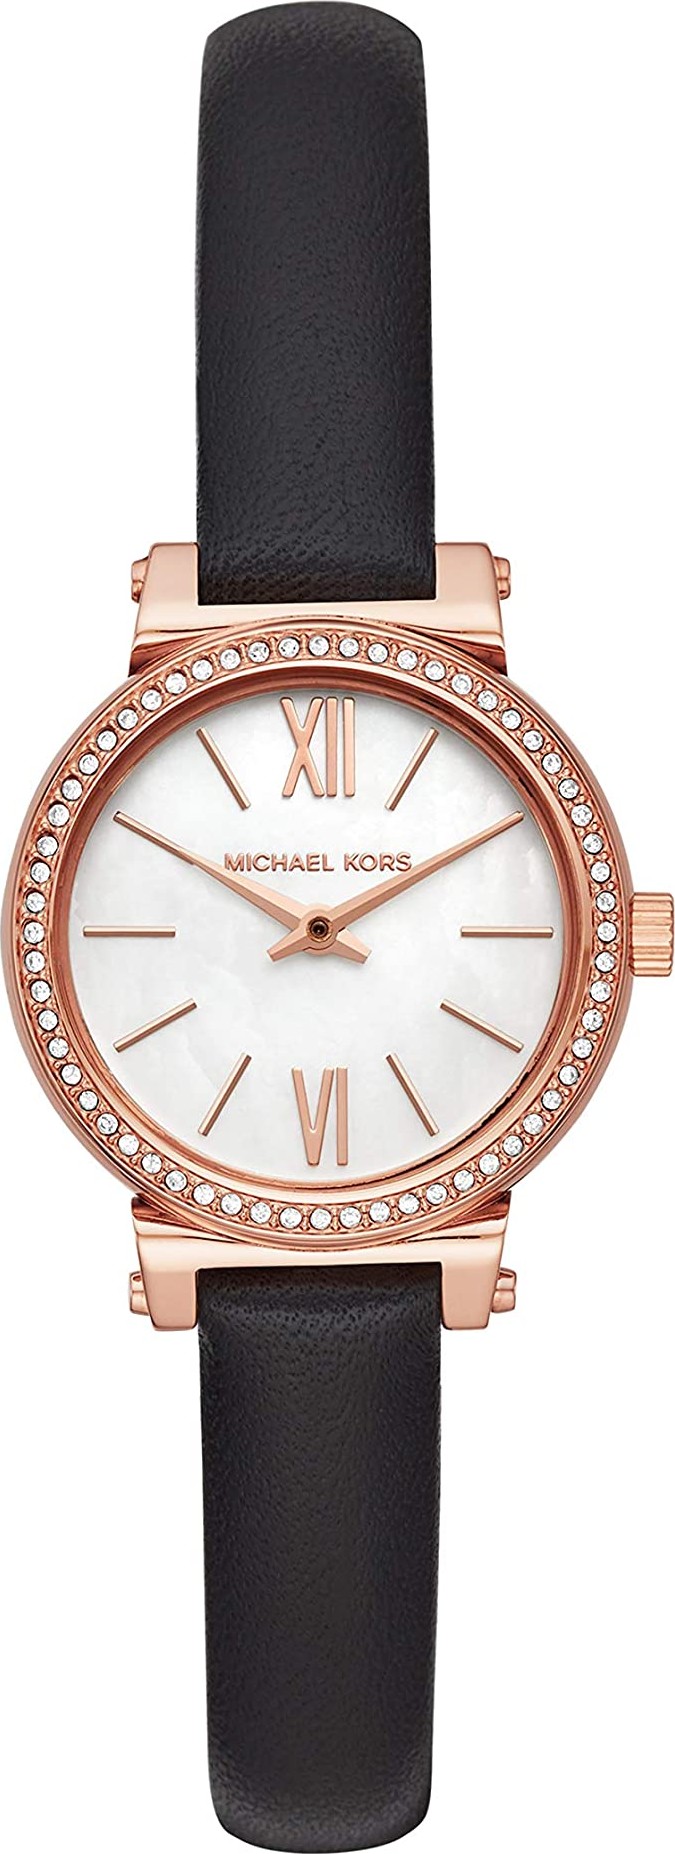 Michael Kors MK6560 Sofie Rose GoldTone Watch 39mm